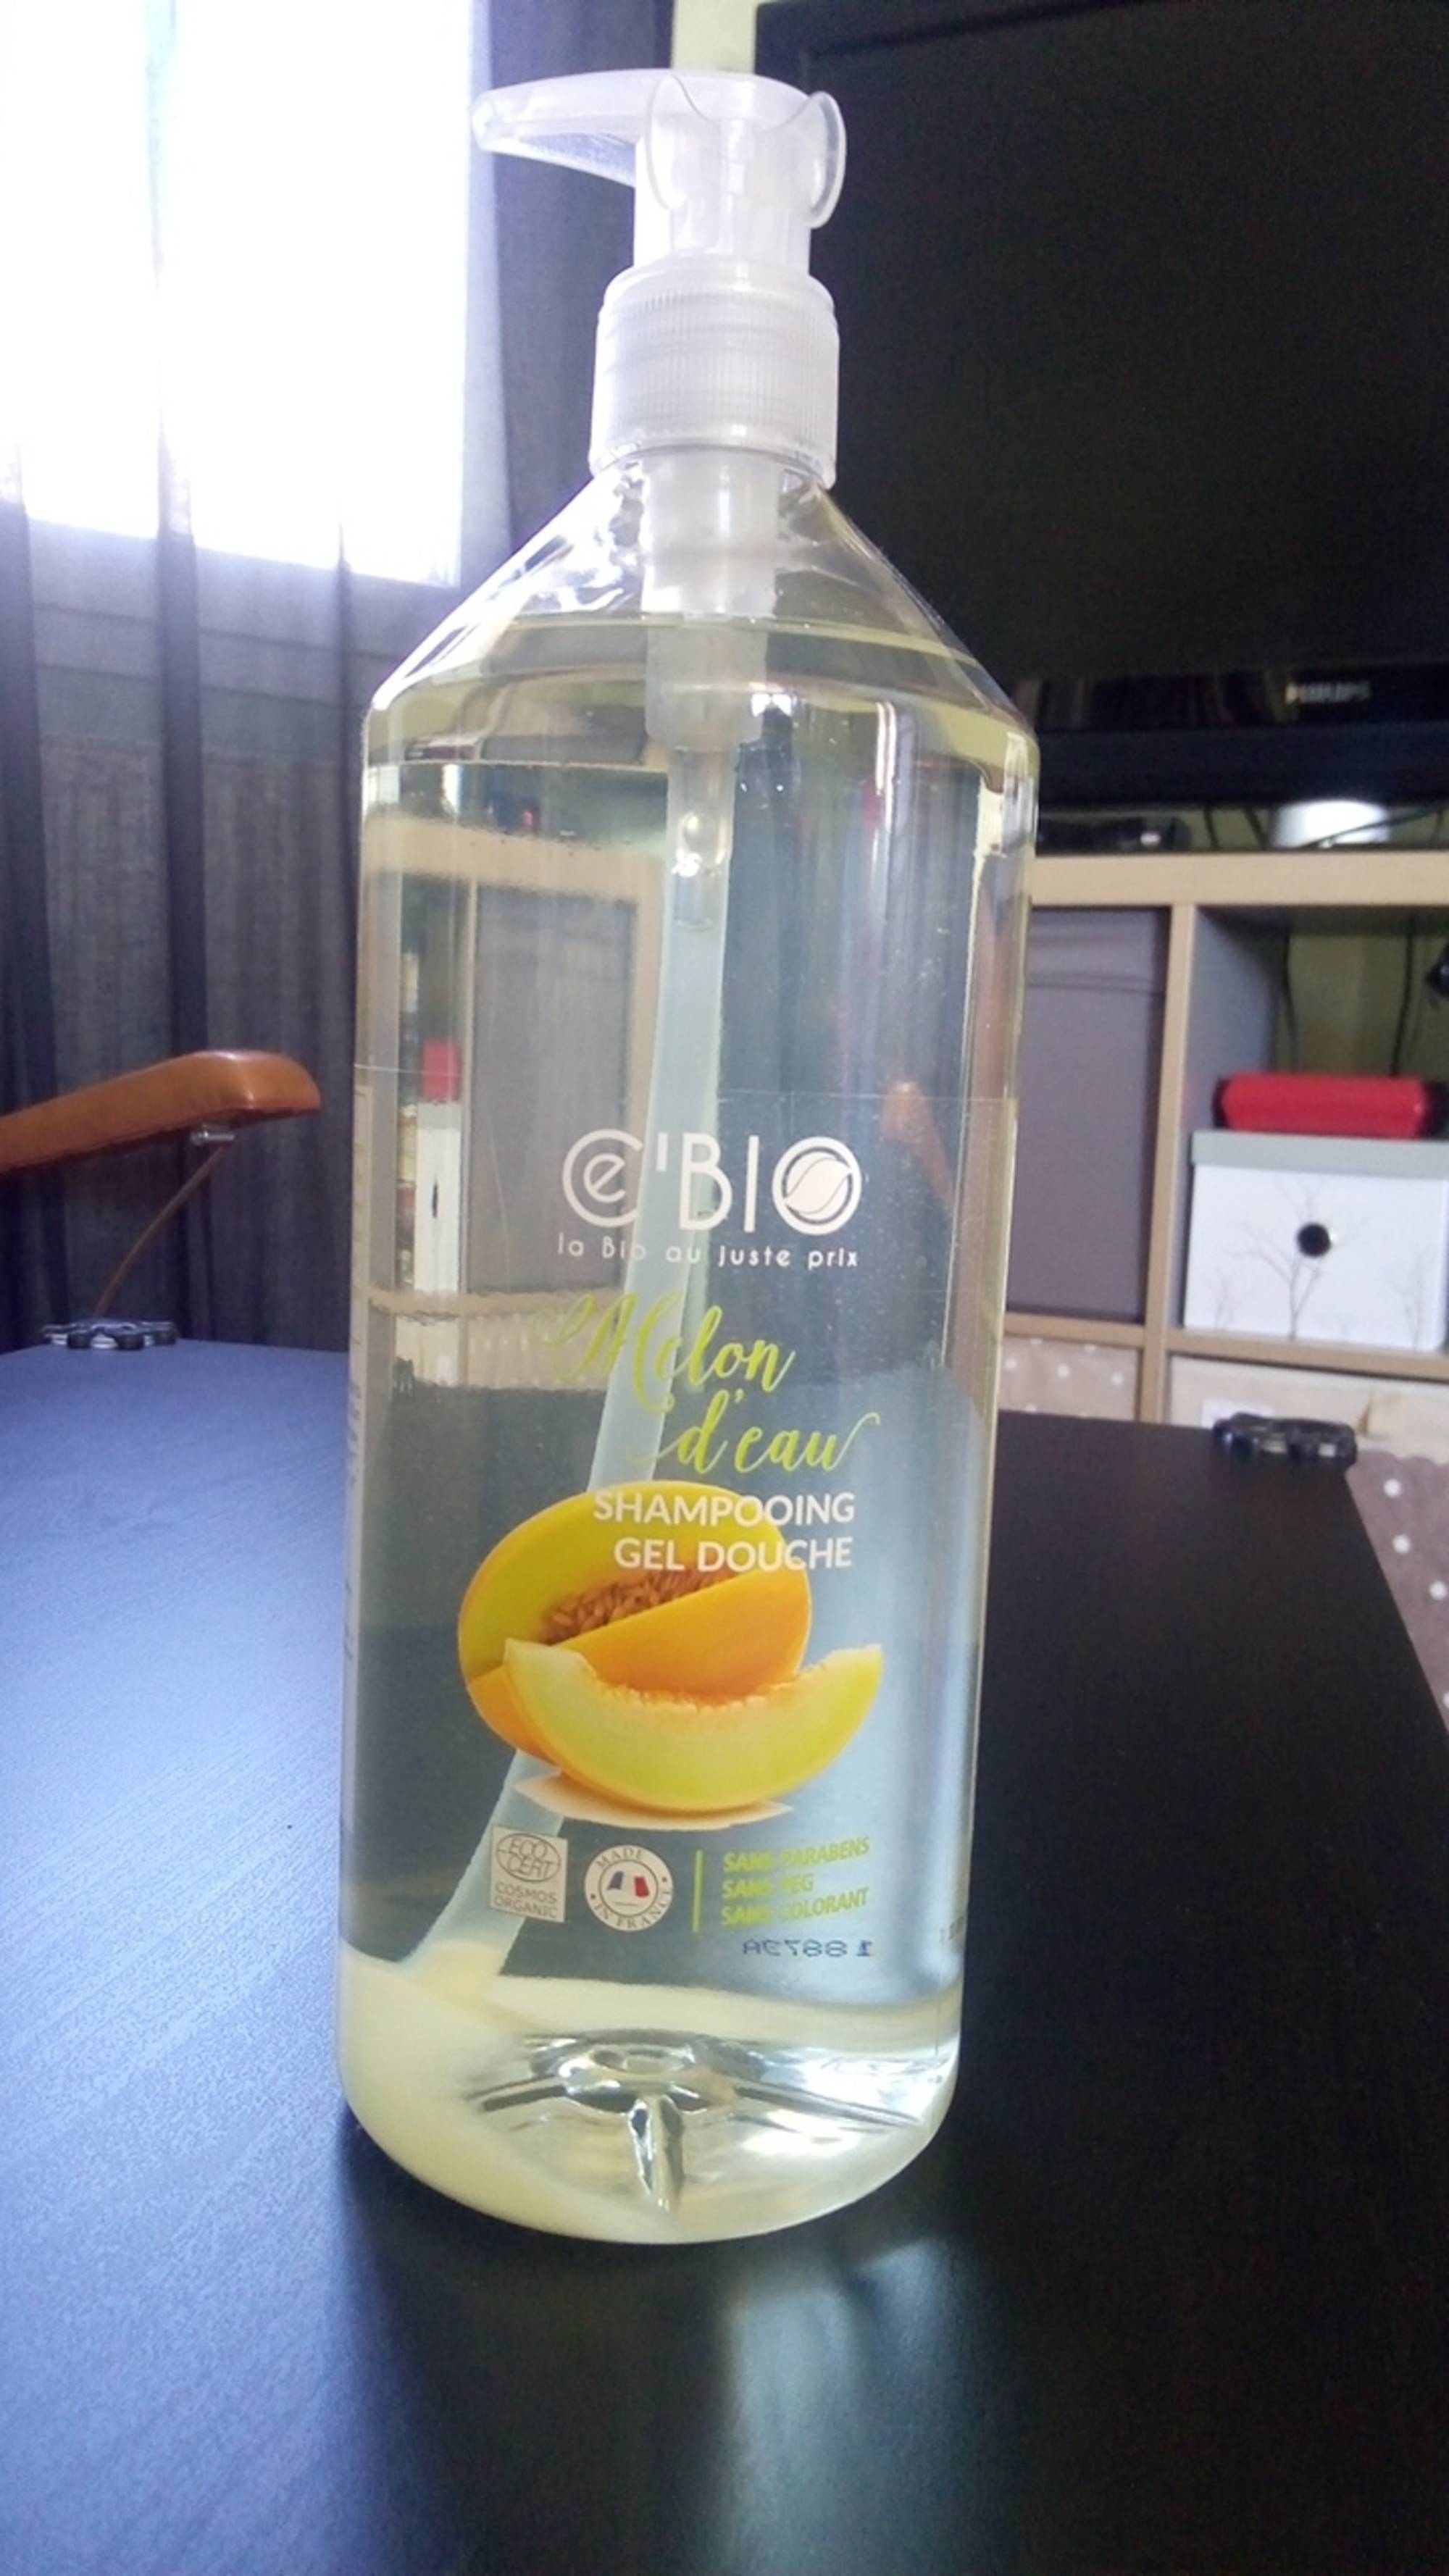 C'BIO - Shampooing gel douche - Melon d'eau